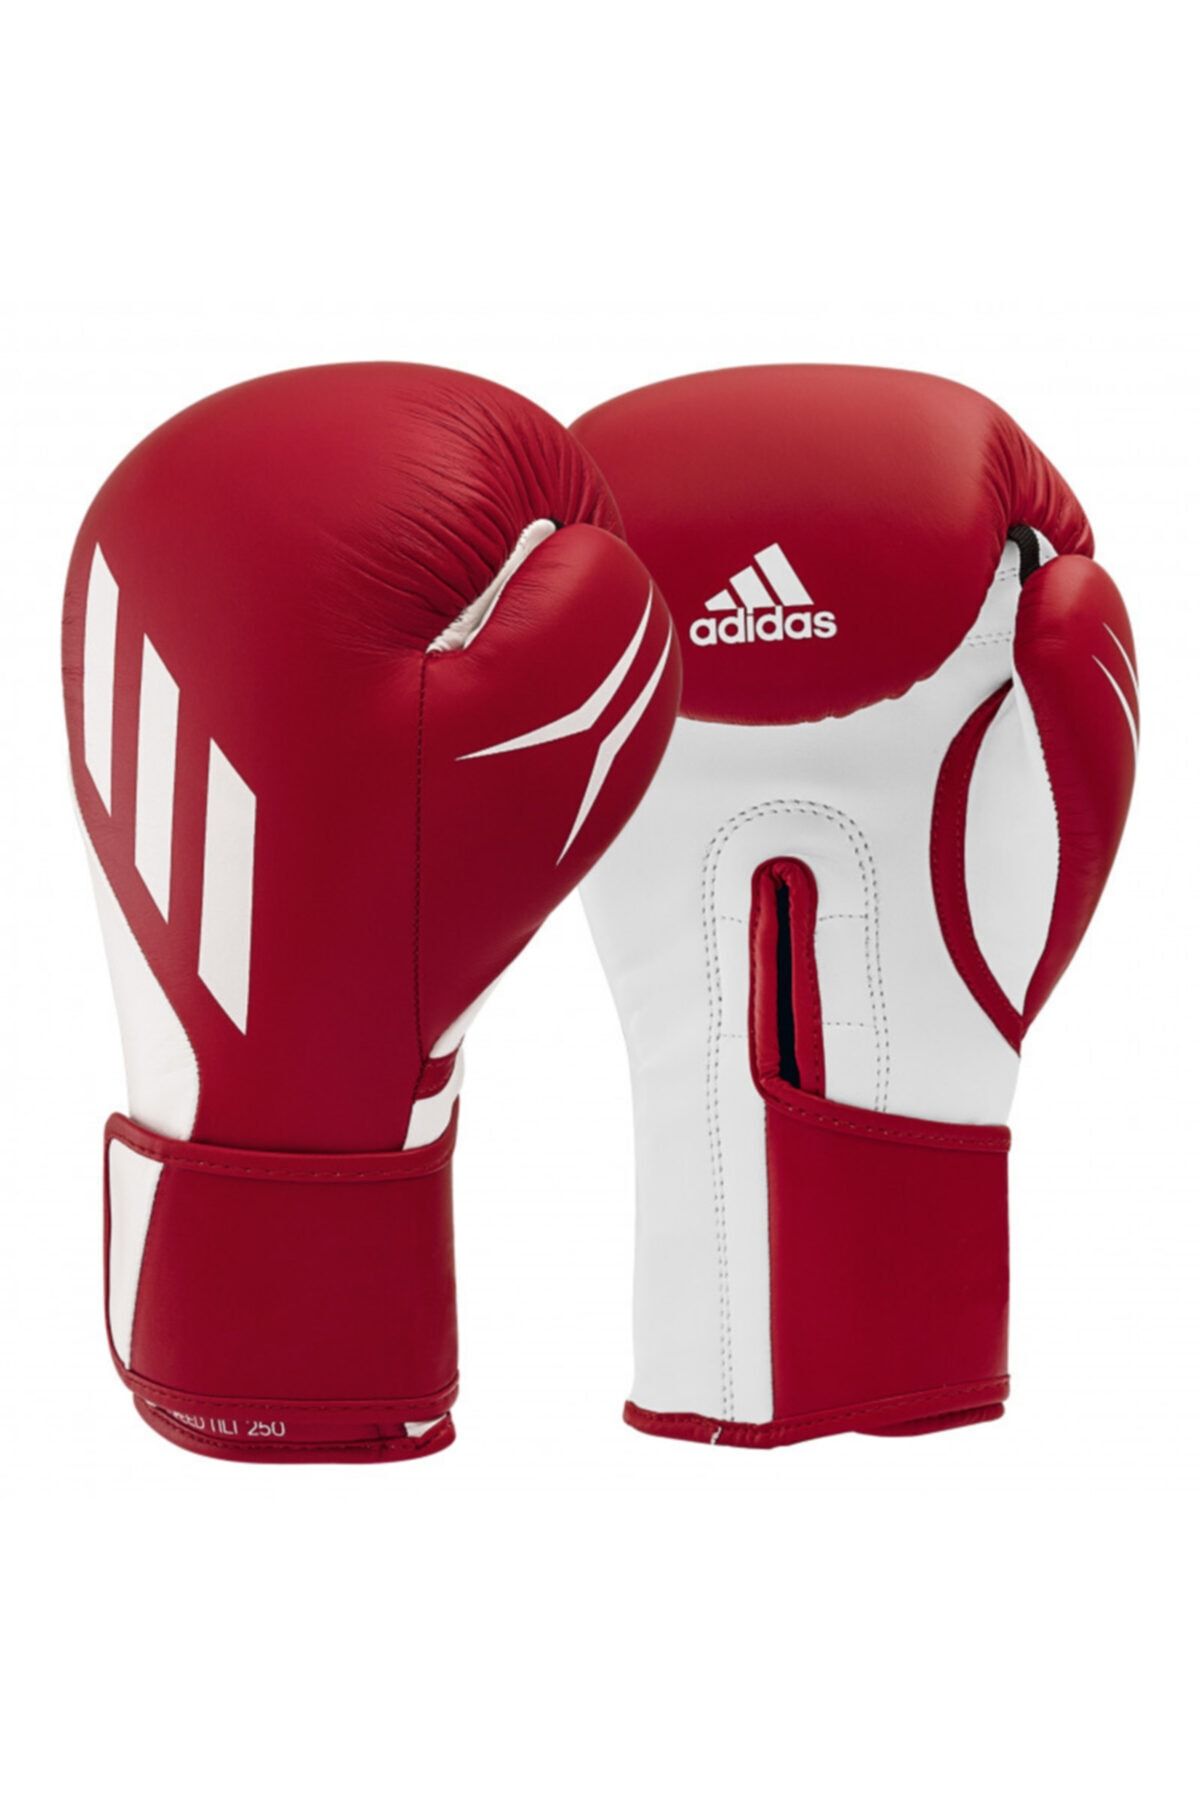 adidas Speed Tilt250 Boks Eldiveni Spd250tg Boxing Gloves